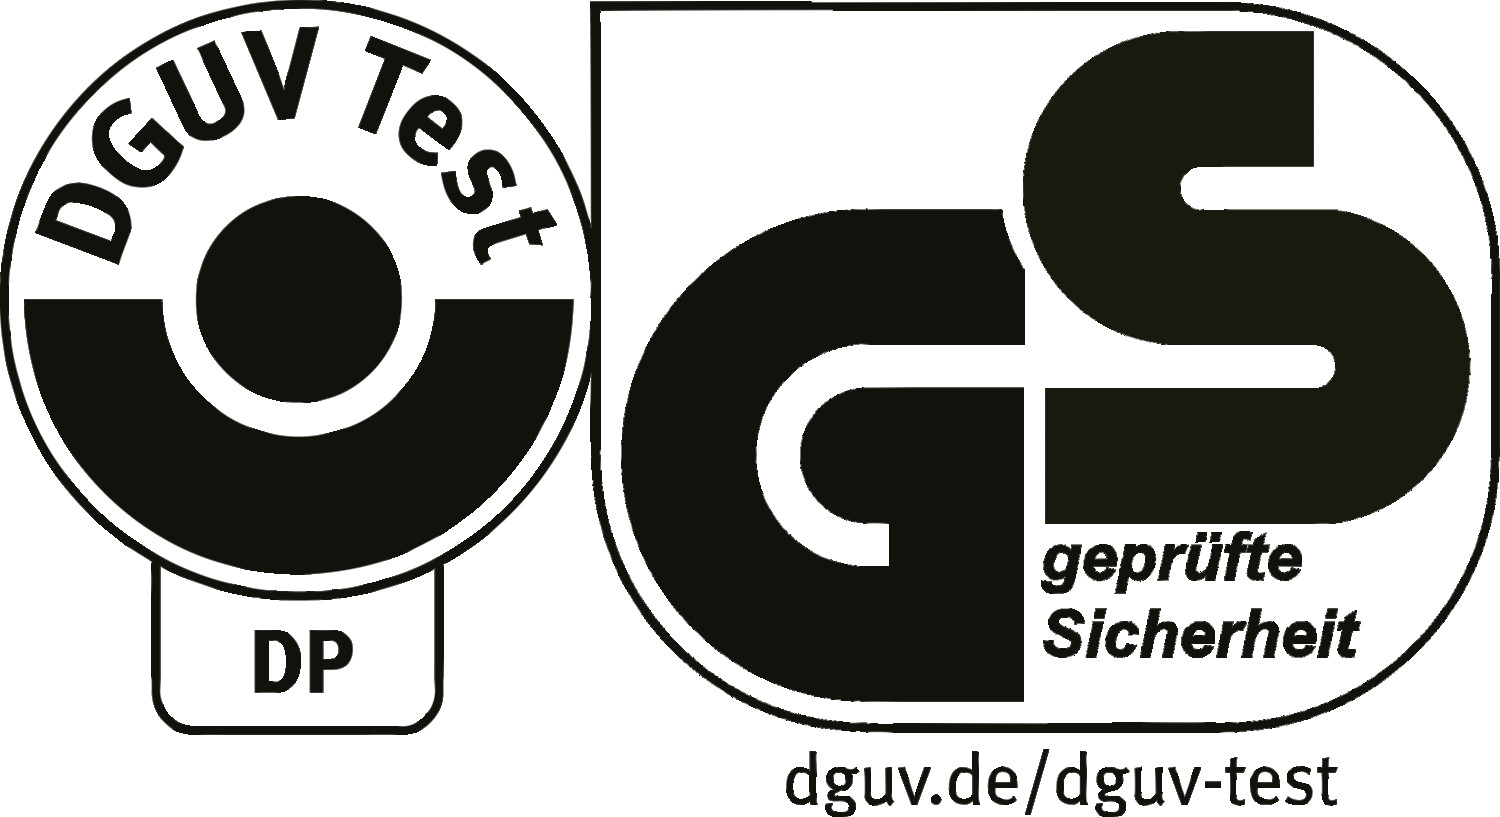 Carries the GS DGUV (German Statutory Accident Insurance Association) test mark